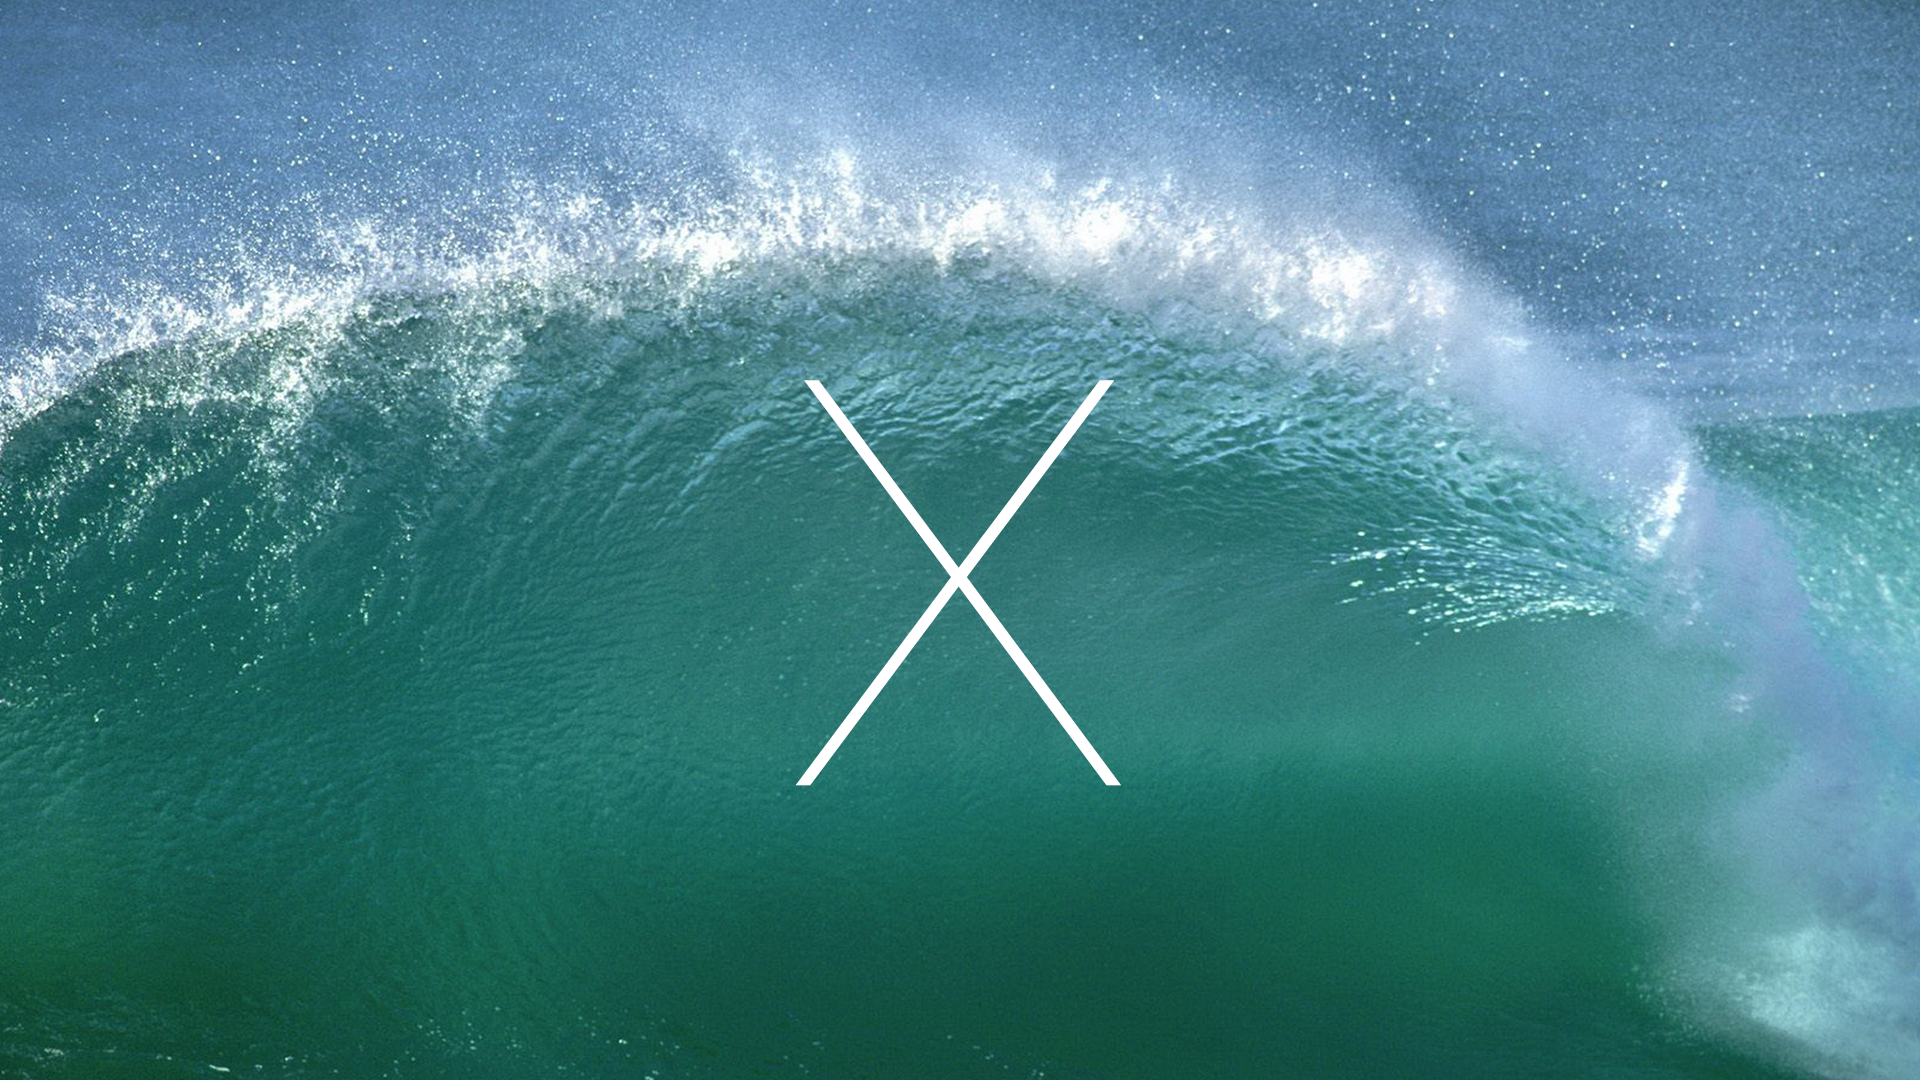 Mac Os X Mavericks Wallpaper For iPad Wave Themed Banner Goes